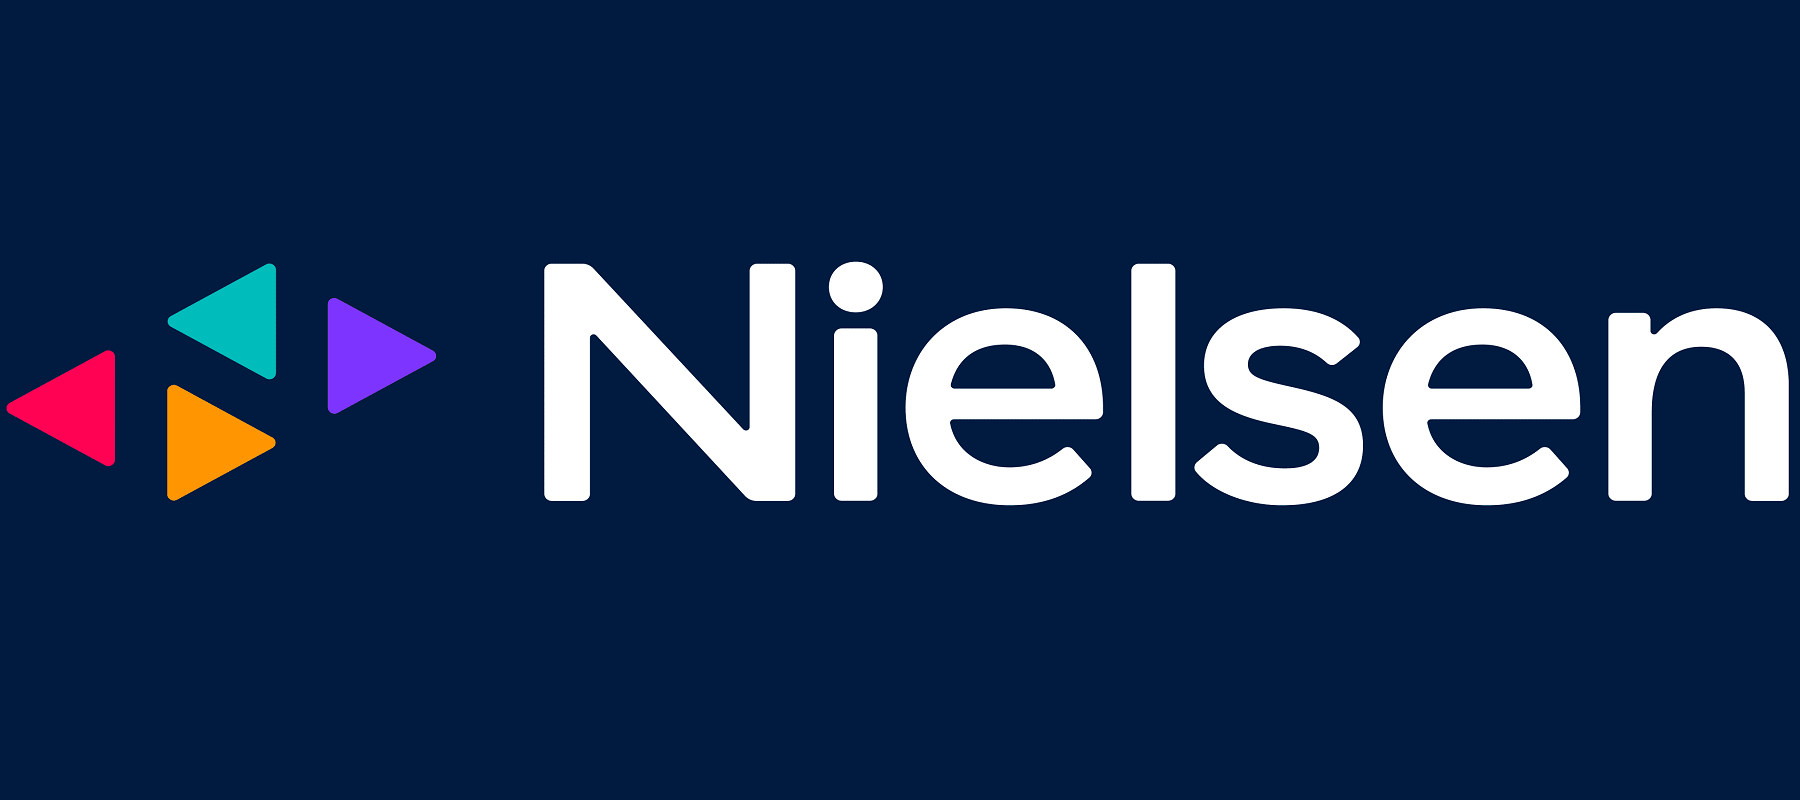 Hallmark Media renews TV measurement agreement with Nielsen